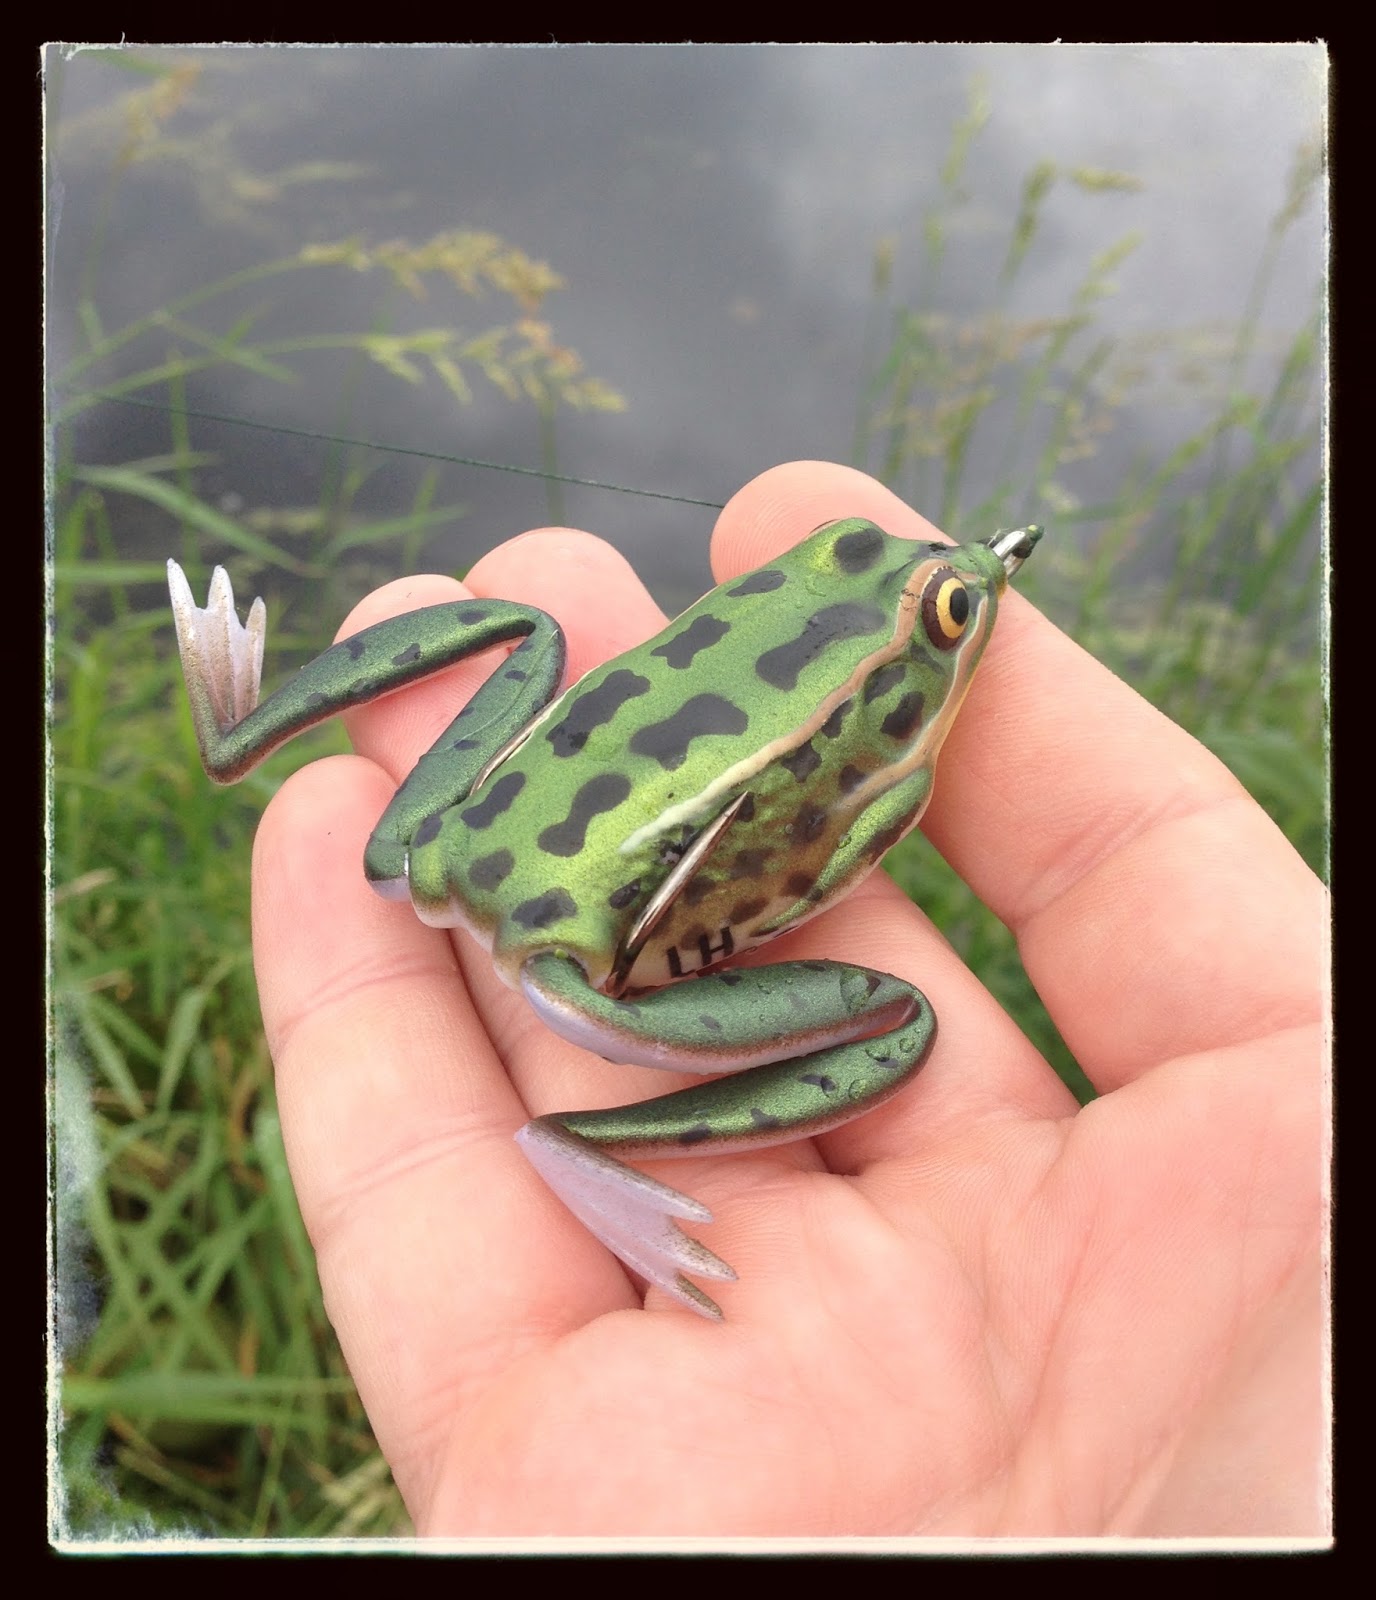 Bass Junkies Frog Pond: Lunker Hunt - Lunker Frog Review